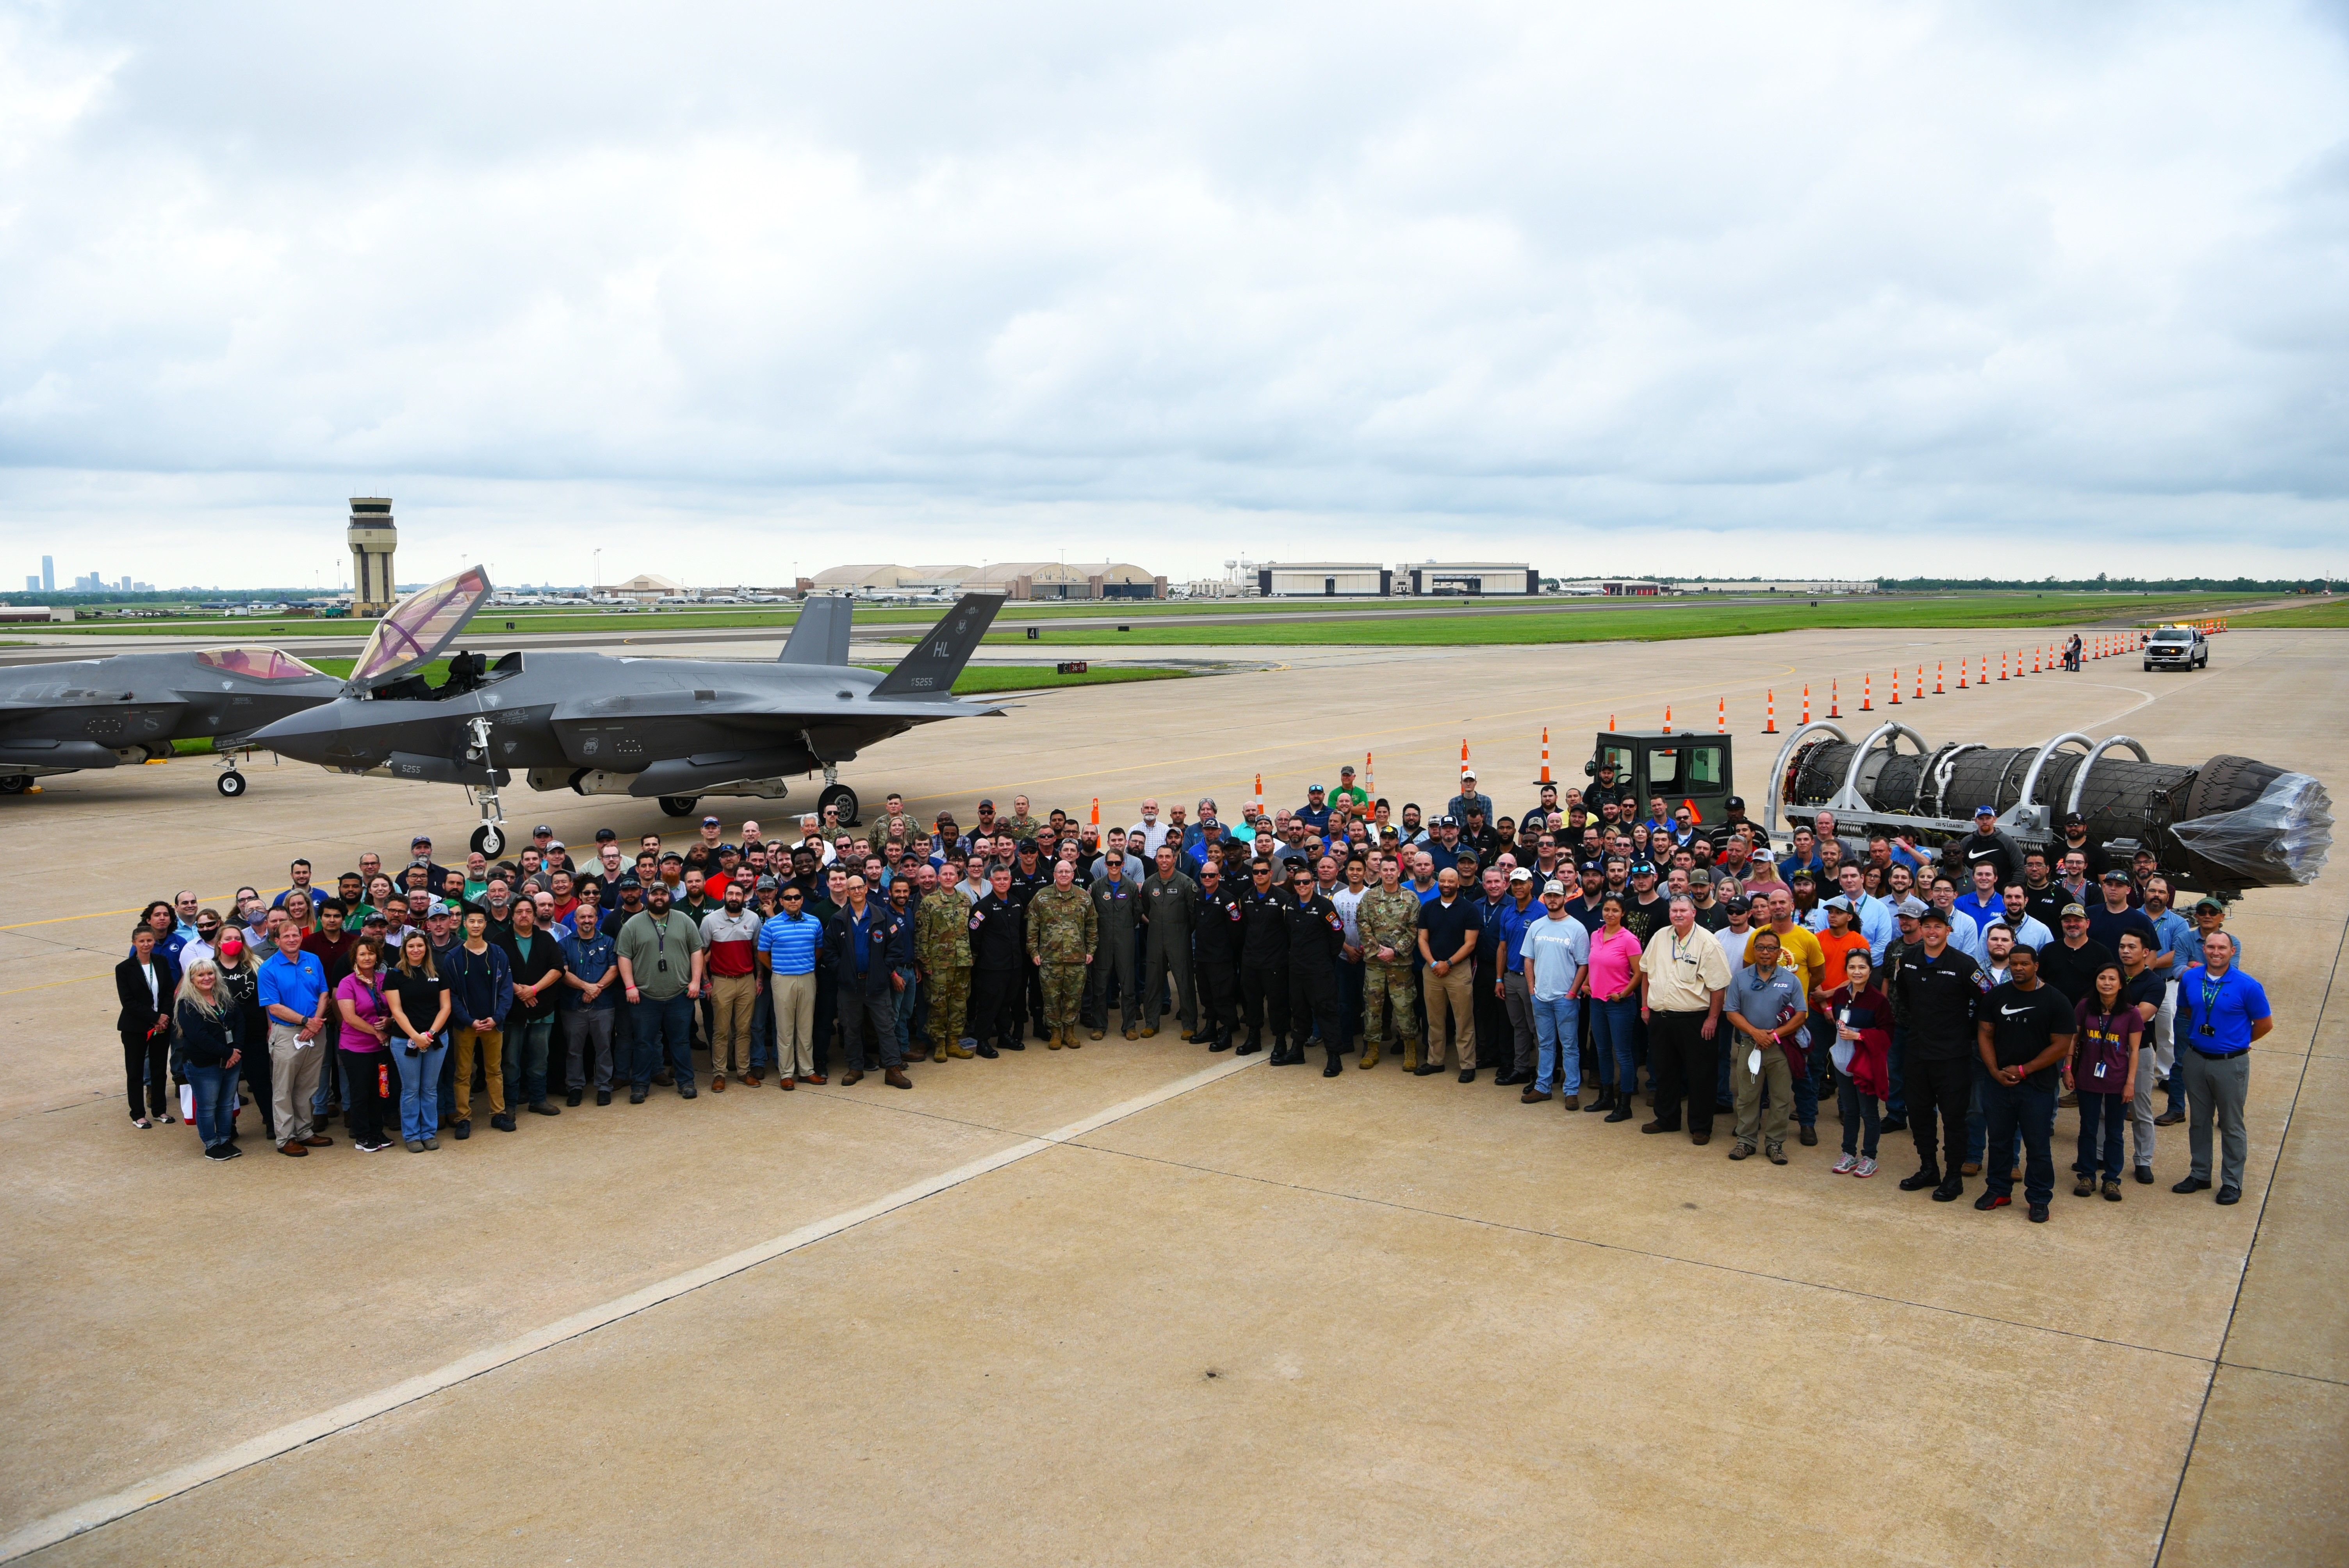 6705742 (16x9) - F-35 Demo Team meets F135 Engine Team [Image 2 of 8] - US Air Force people, F-35 and F-135 Turbofan